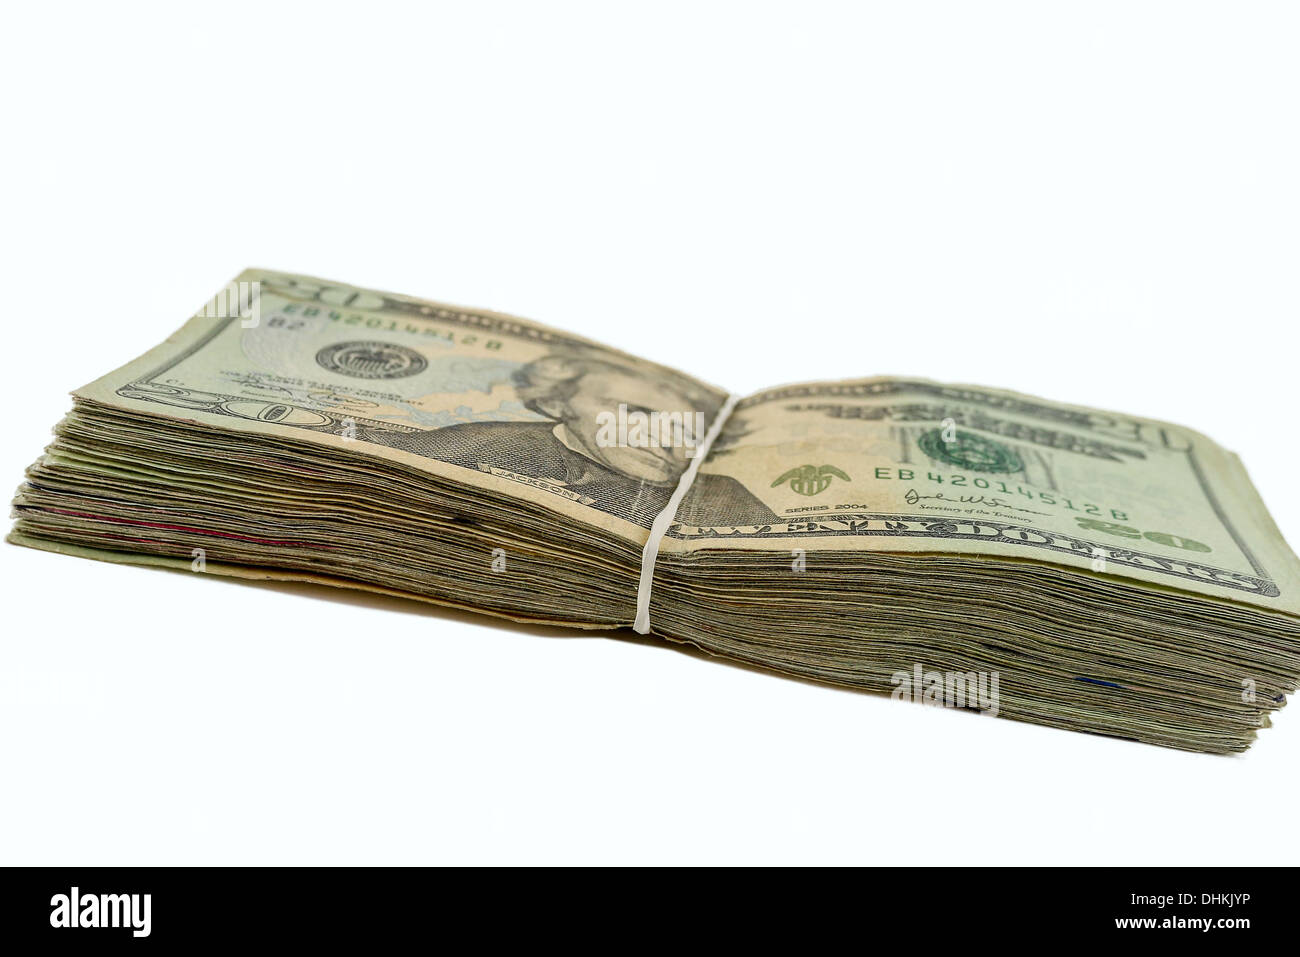 Stock image of $20 Dollars bills isolated on white Stock Photo